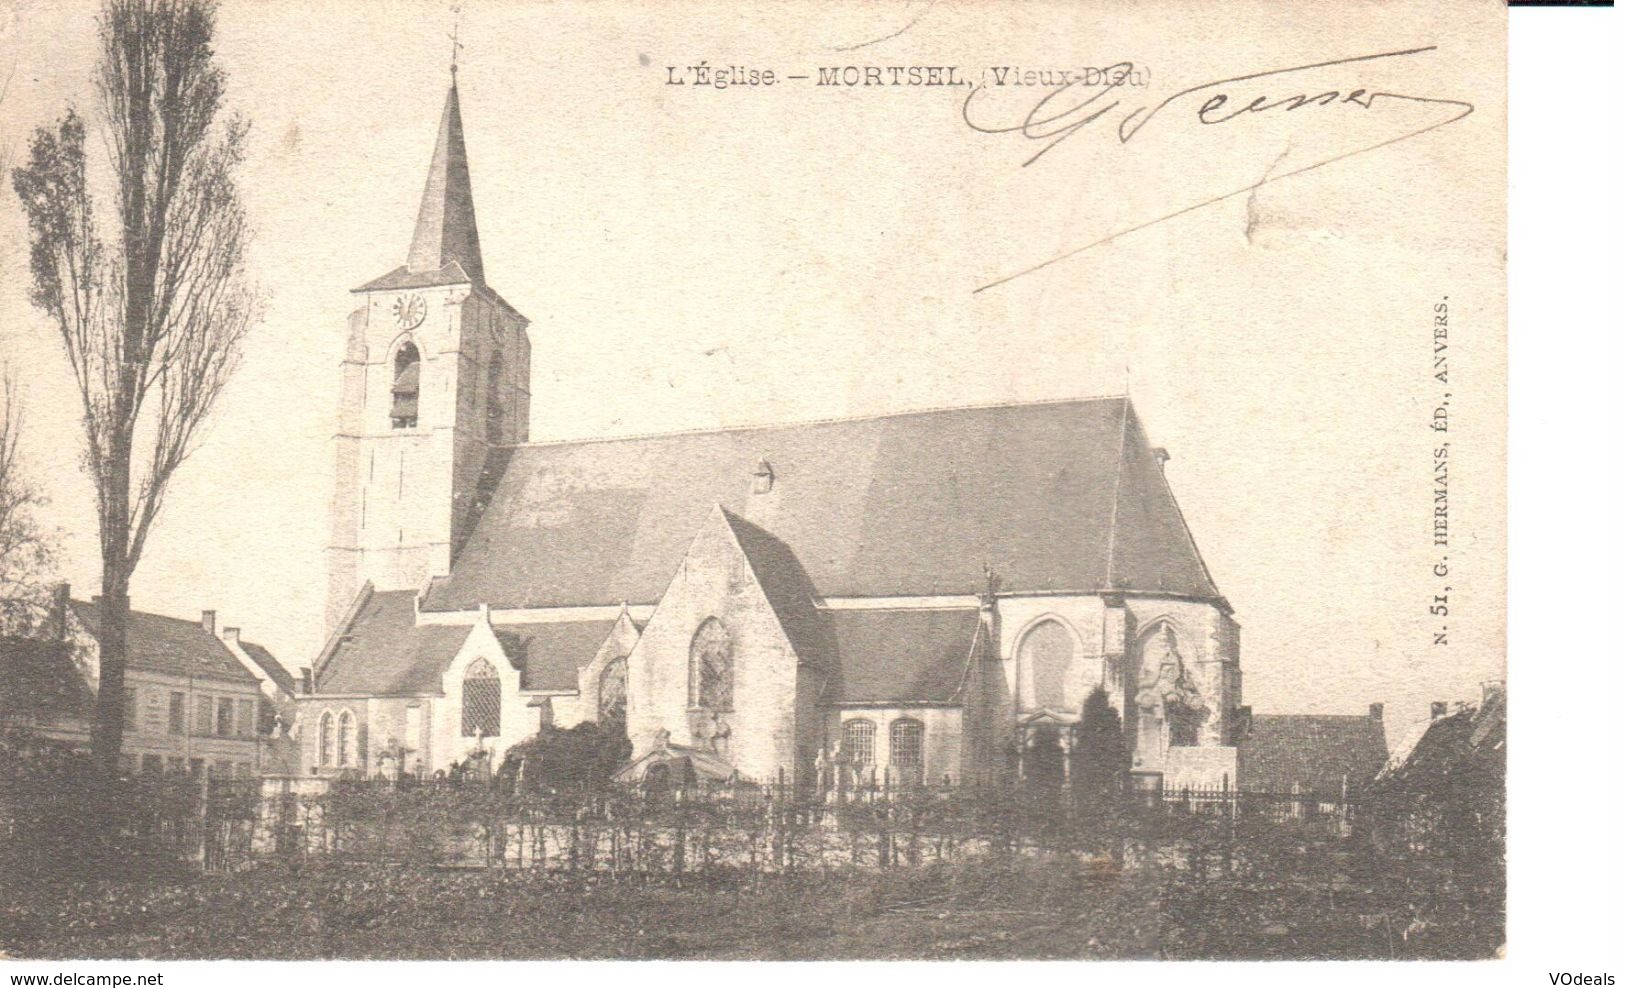 Mortsel - CPA - L'Eglise (vieux Dieu) - Mortsel